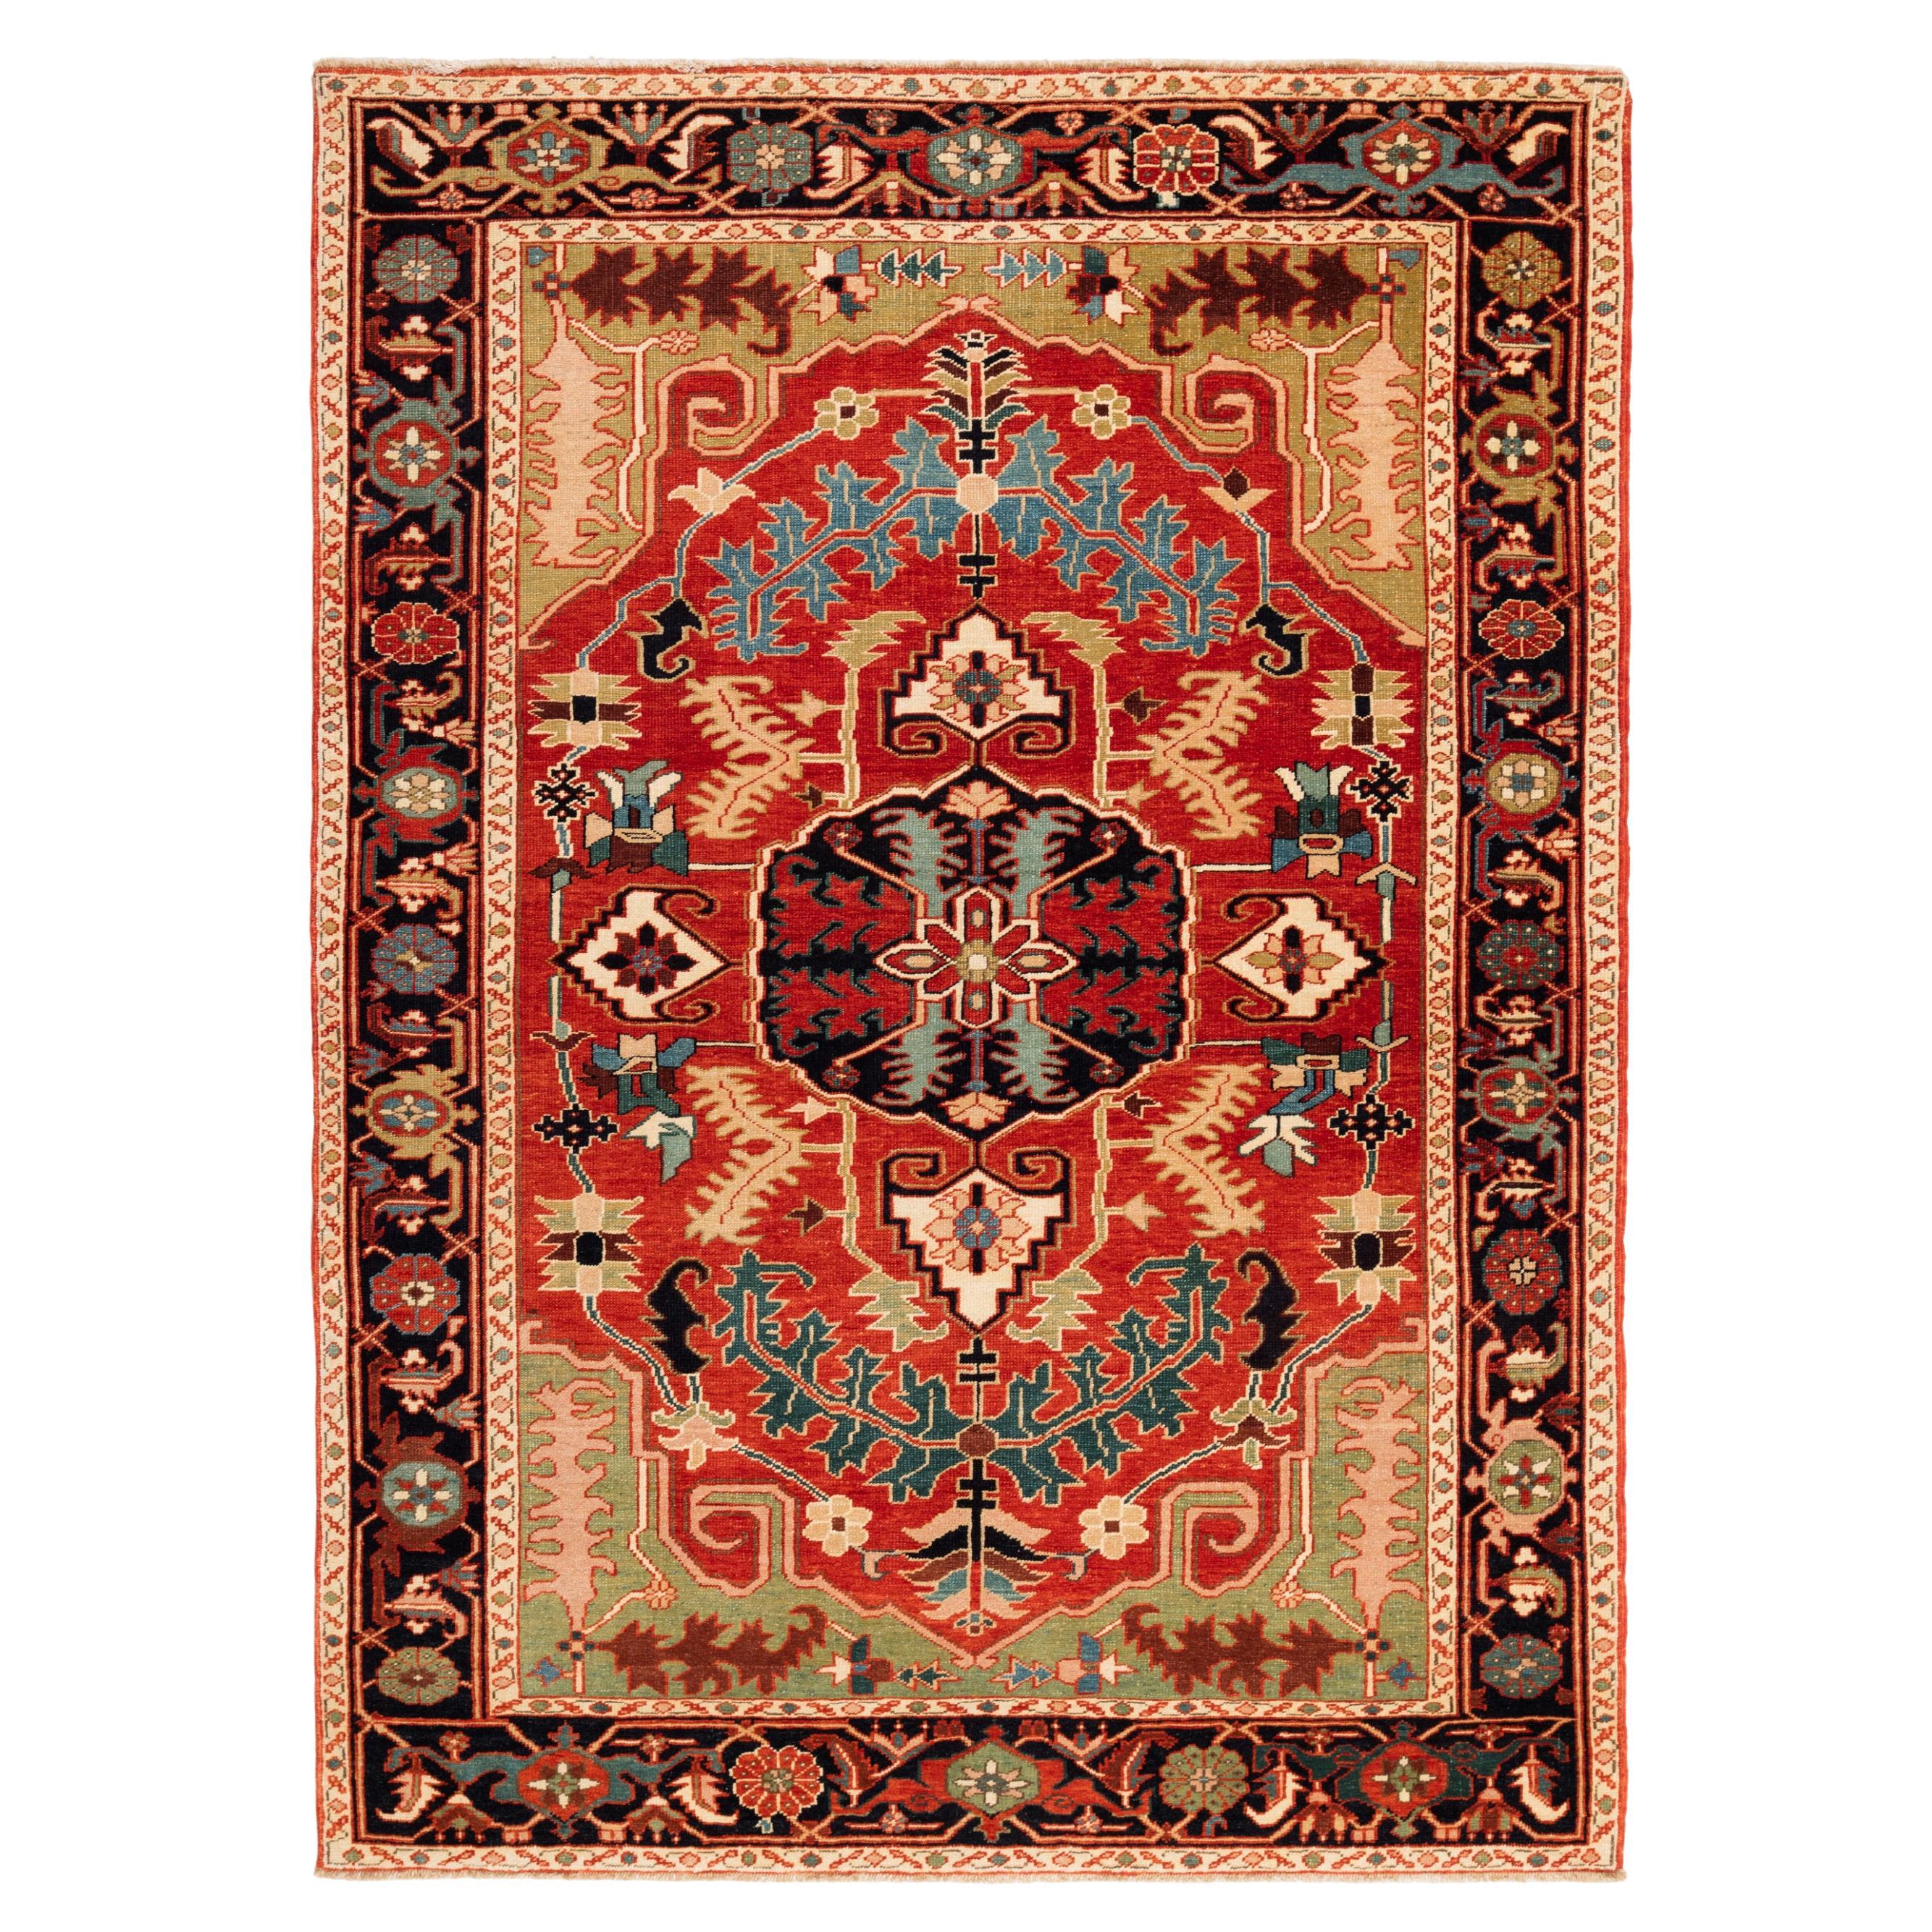 Ararat Rugs Heriz Medallion Rug 19th Century Persian Revival Carpet Natural Dyed